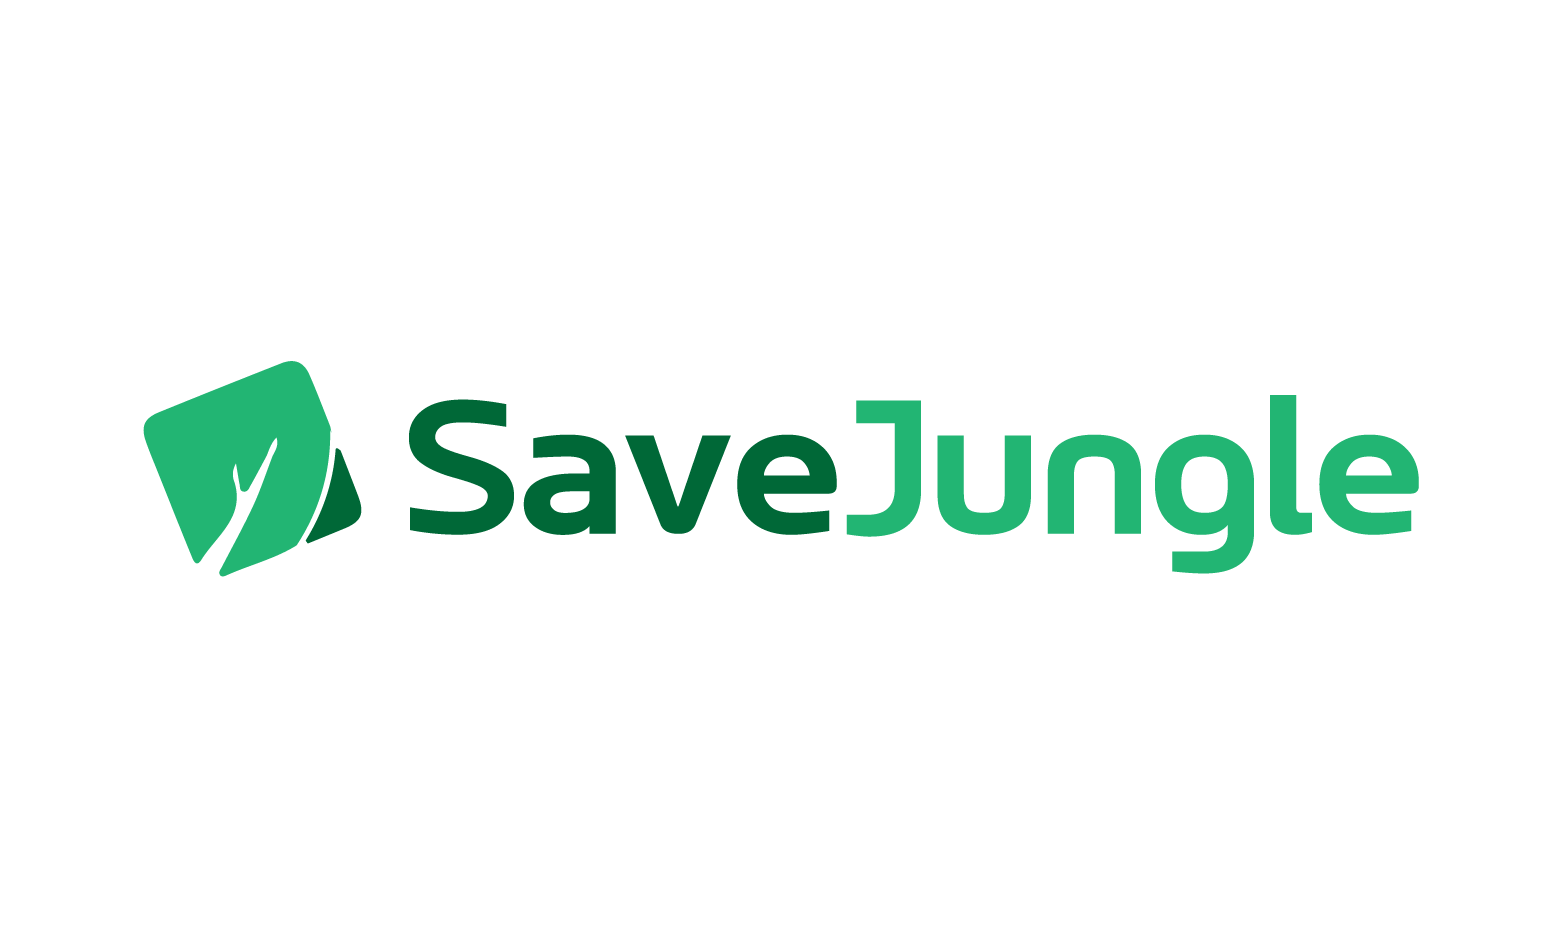 SaveJungle.com - Creative brandable domain for sale